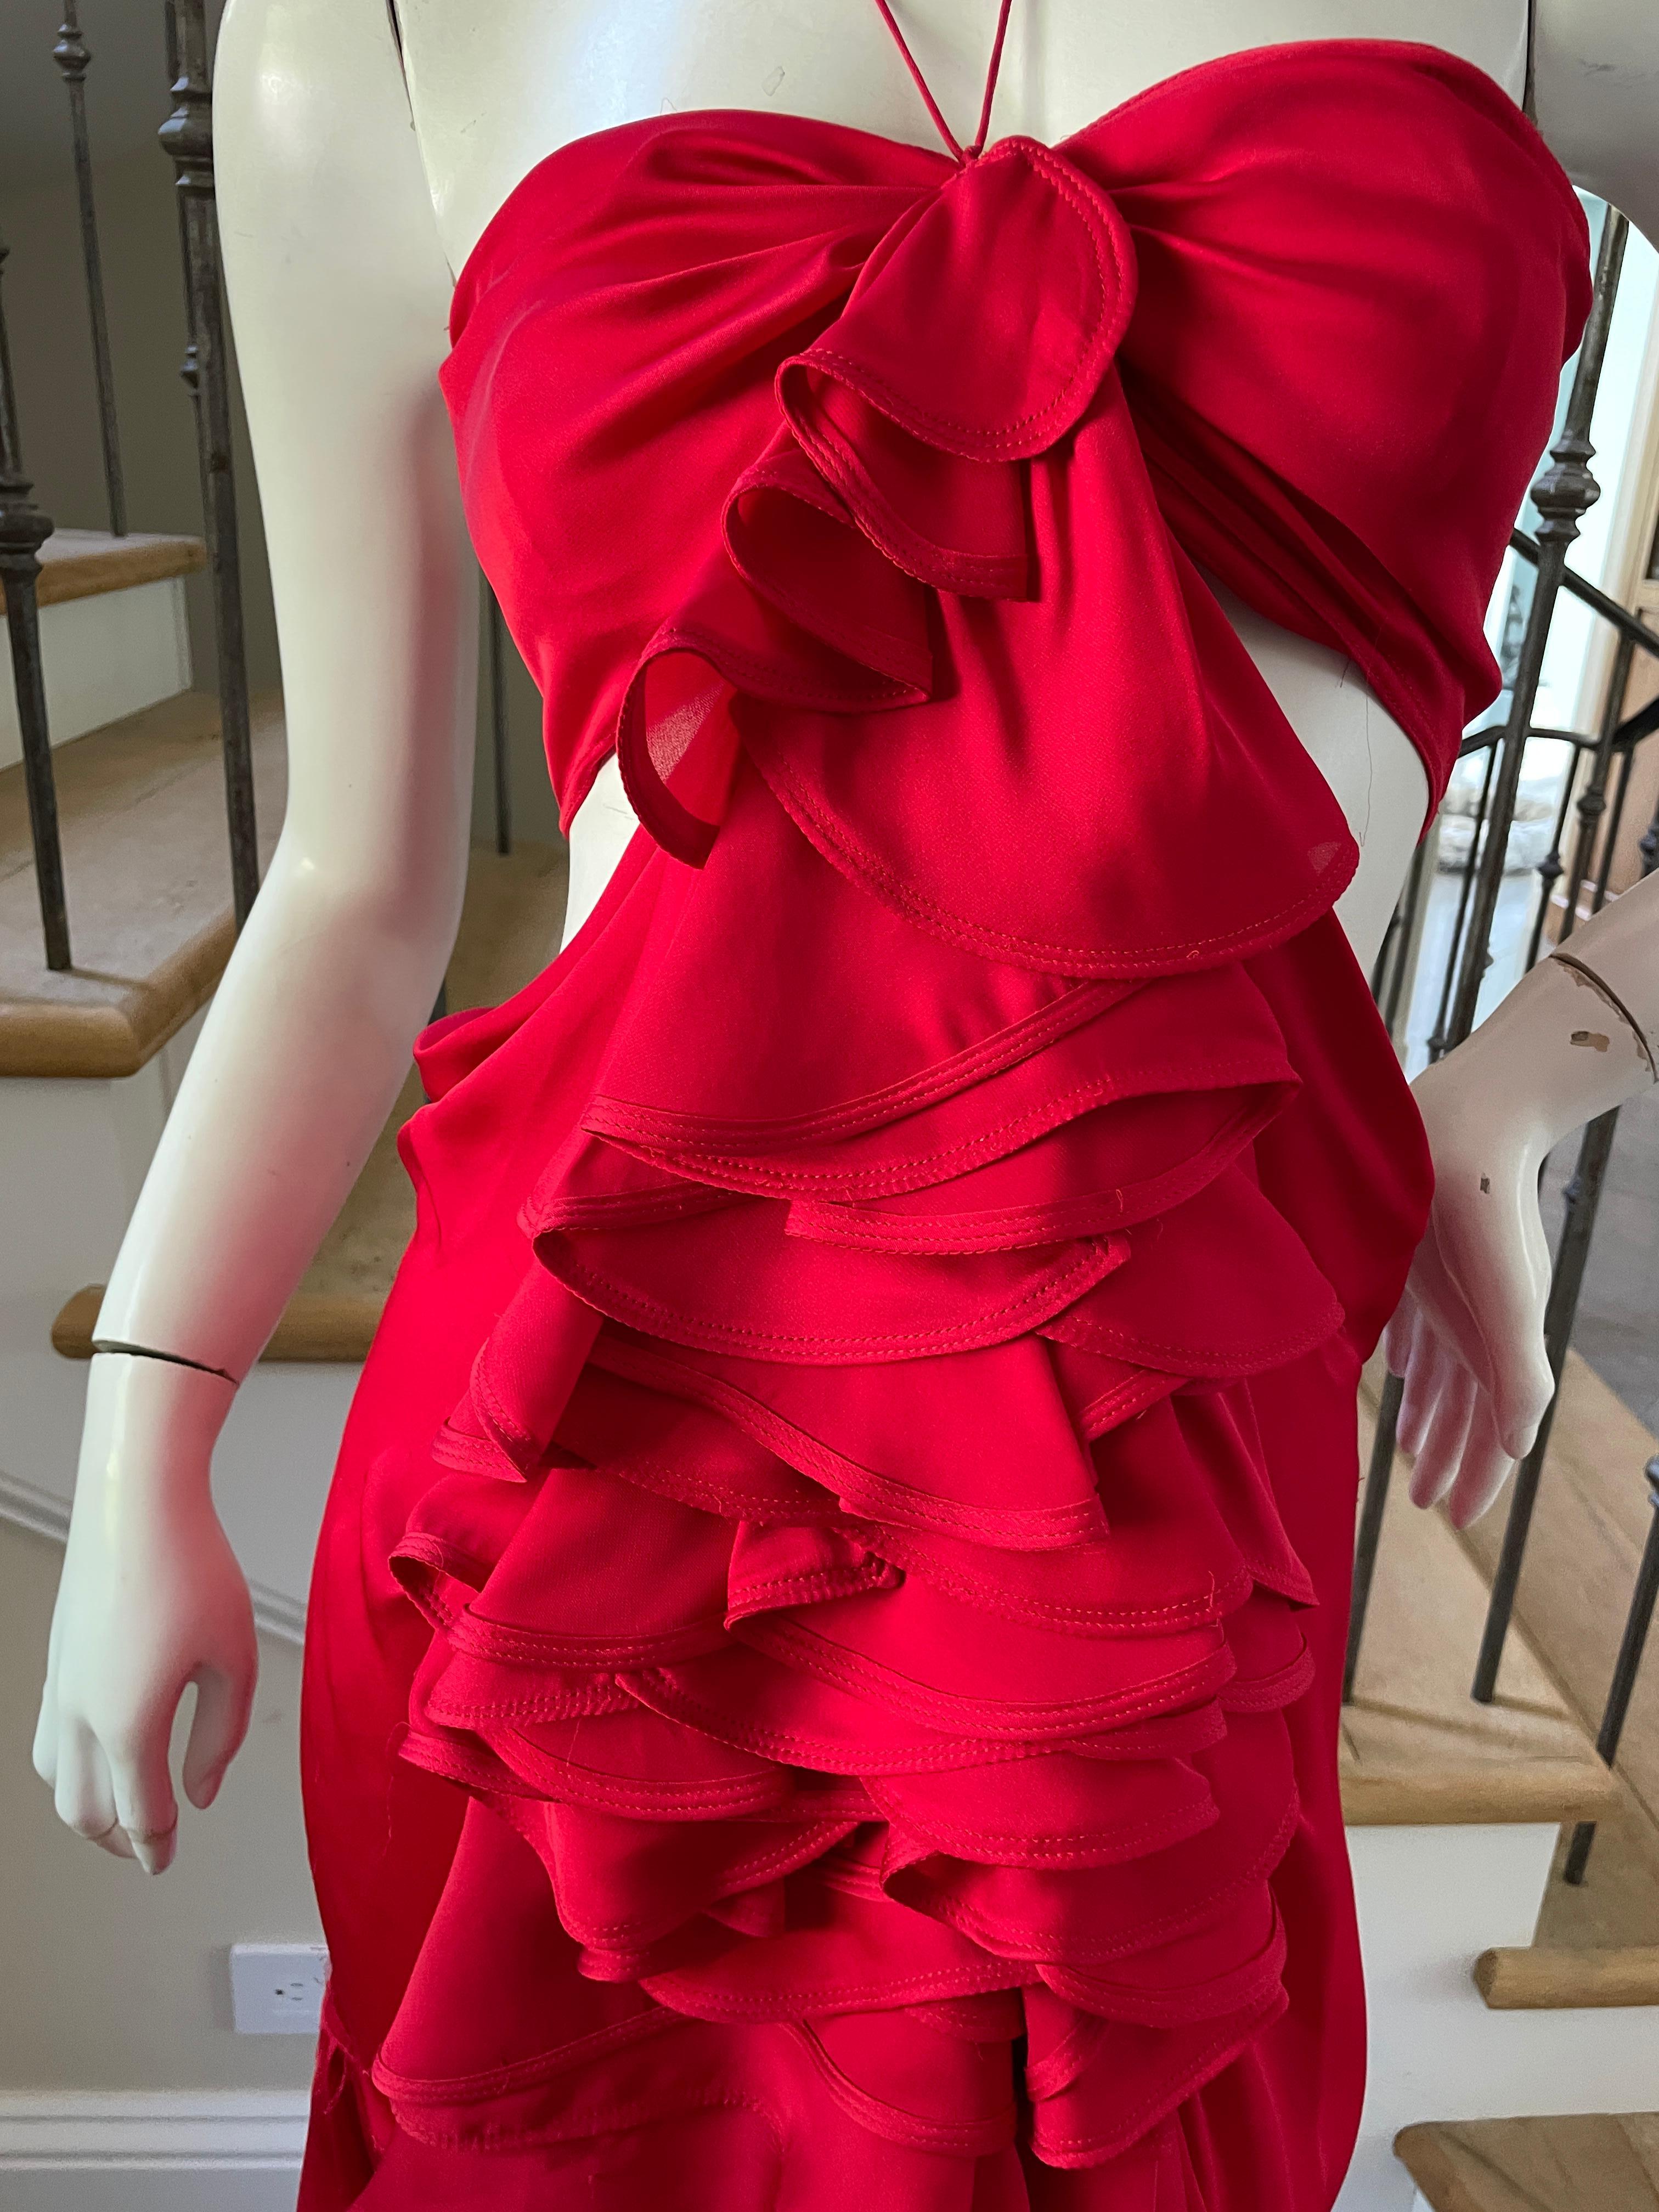 Yves Saint Laurent by Tom Ford 2003 Ruffled Red Silk Dress  8